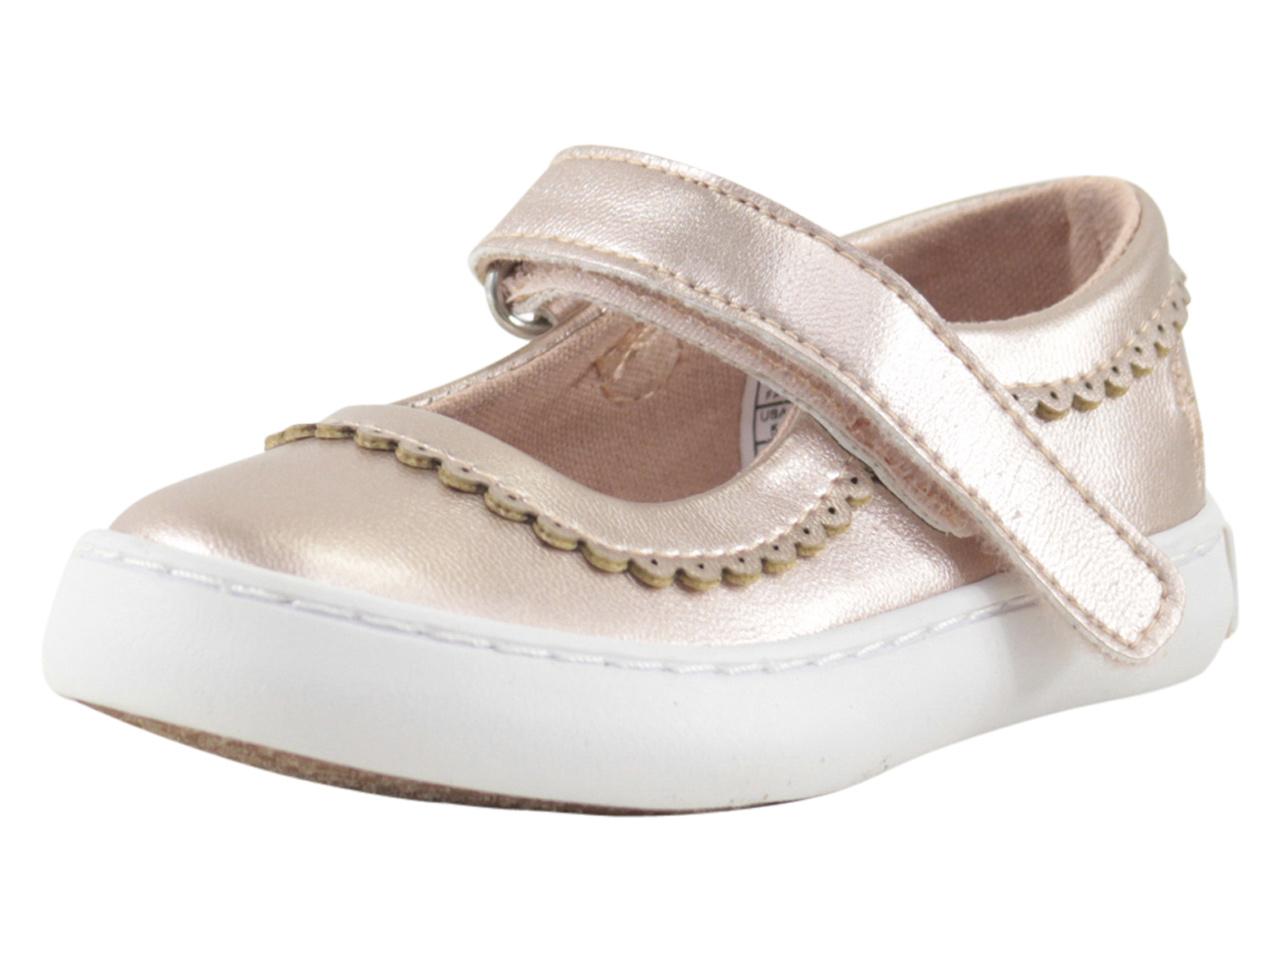 Pella-II Mary Janes Sneakers Shoes